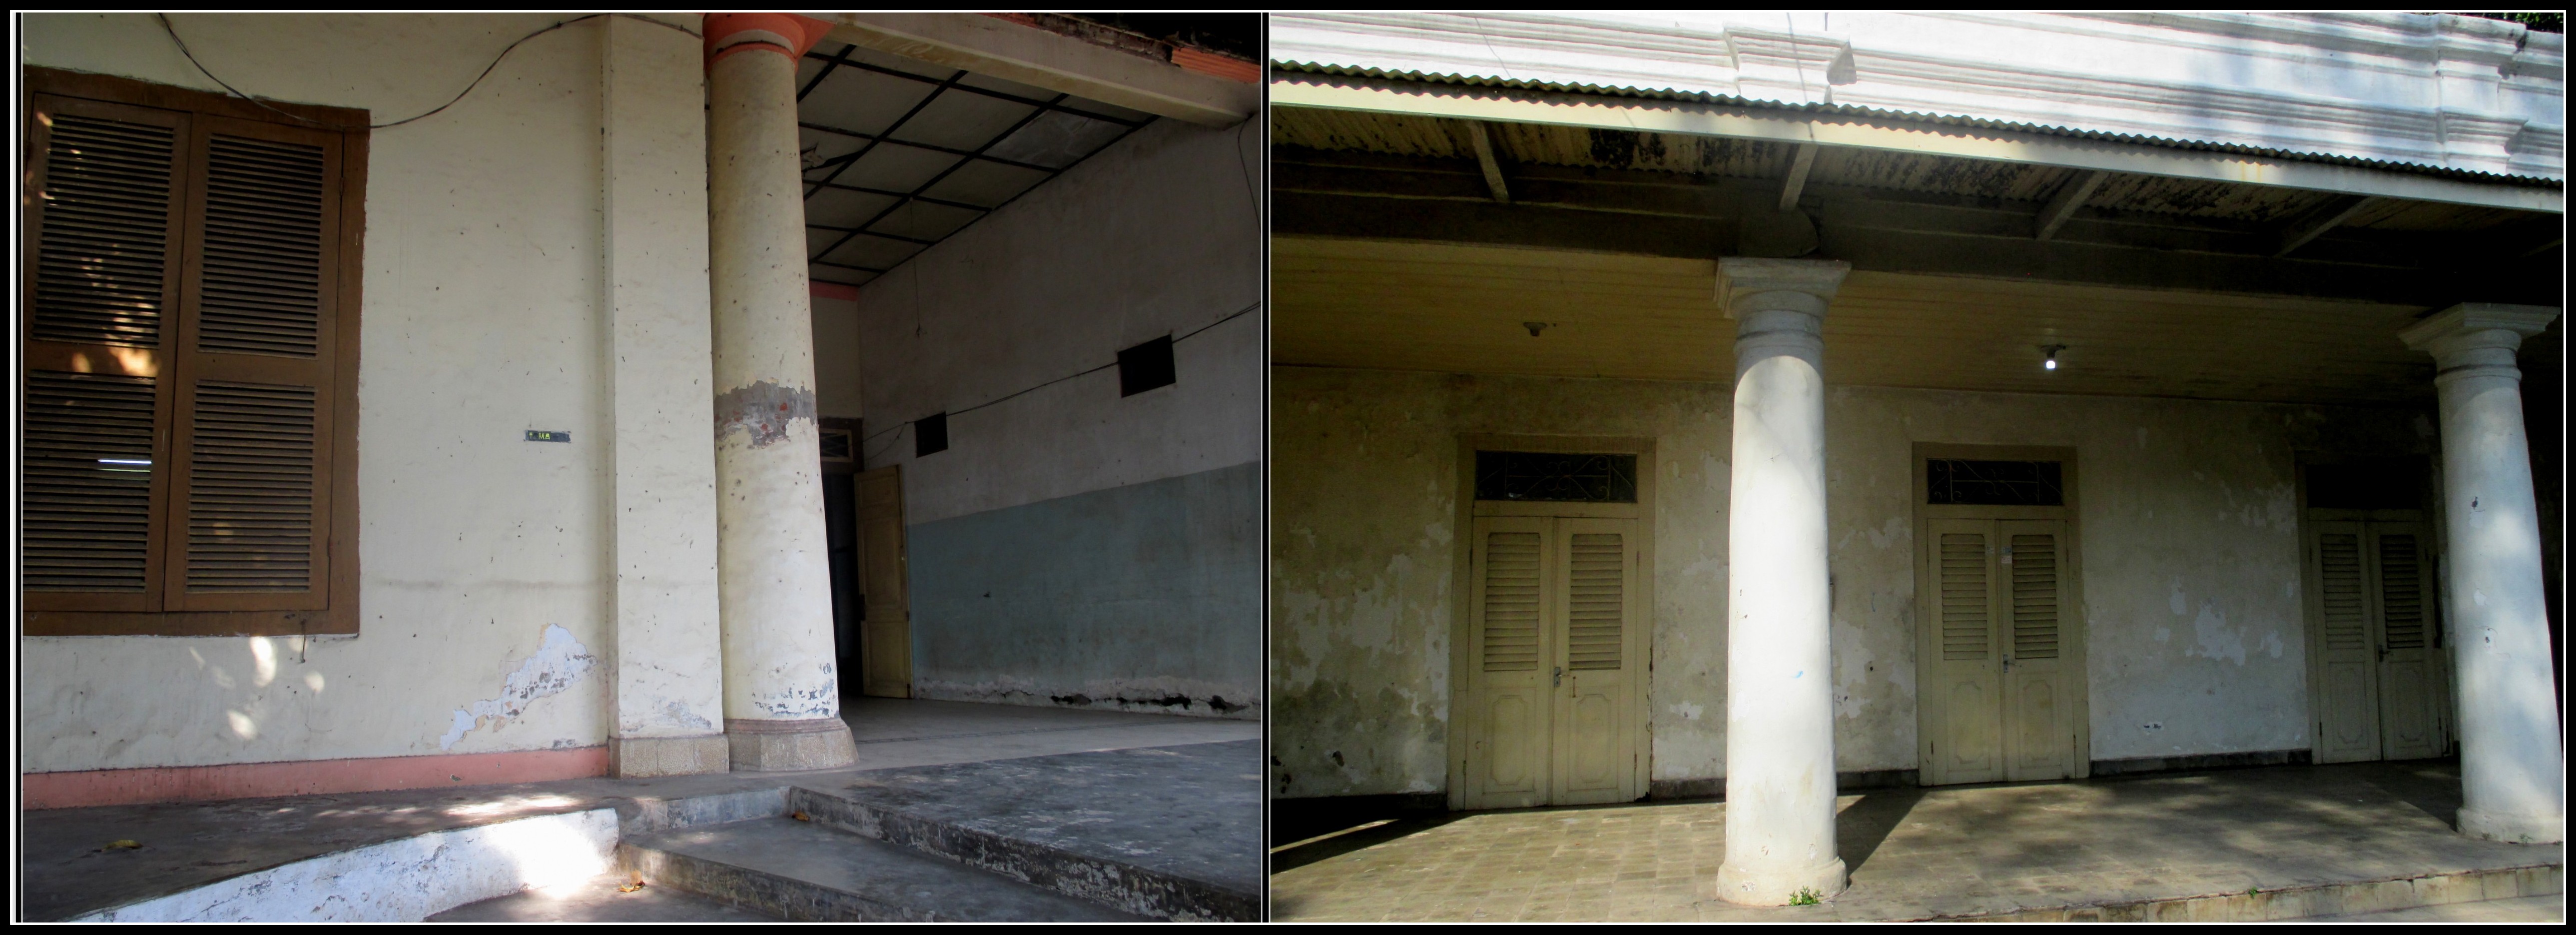 Gedung-gedung tua yang ada di Jalan Suroyo